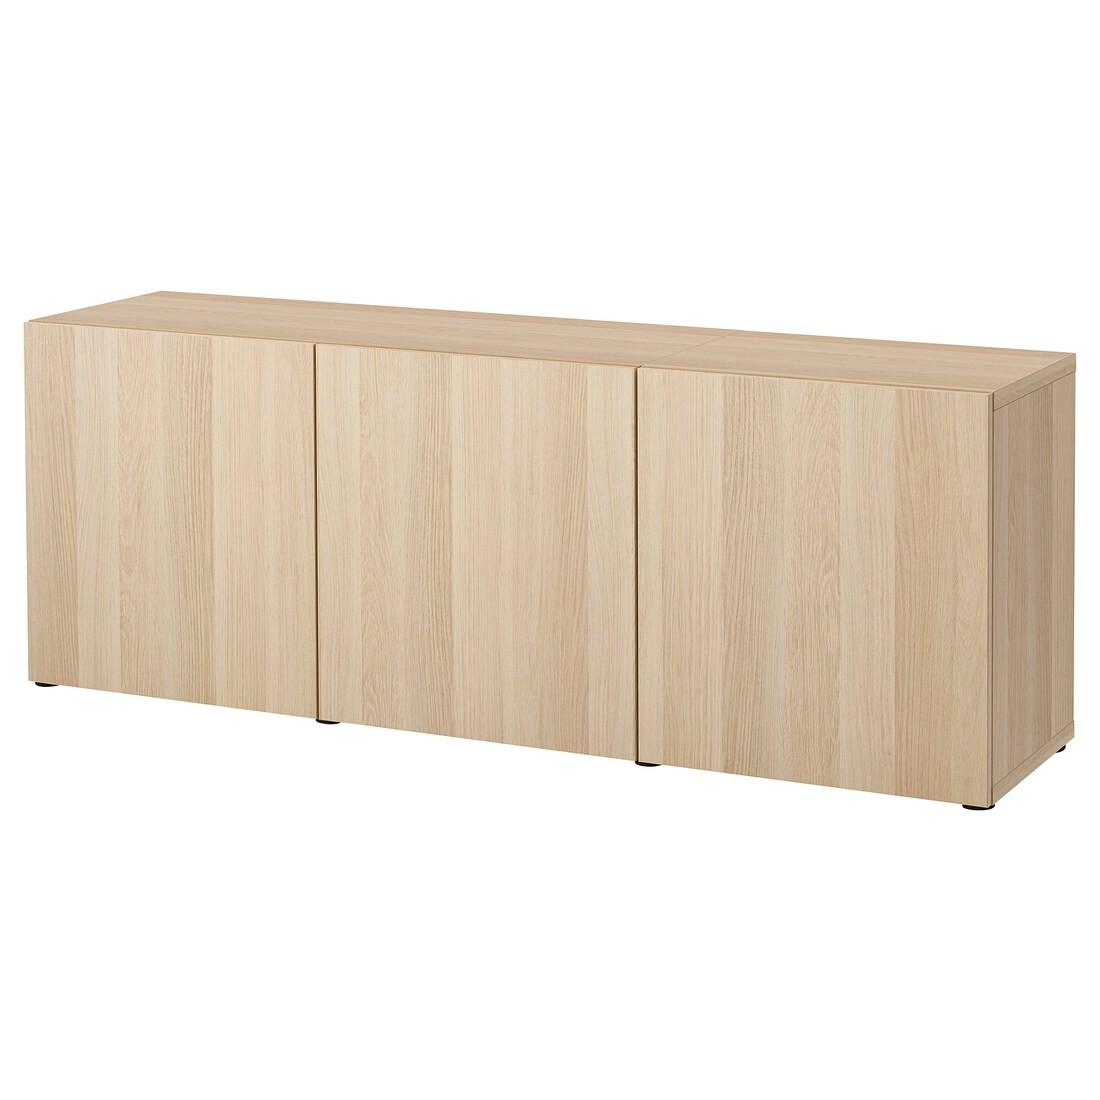 IKEA BESTÅ БЕСТО Комбинация для хранения с дверцами, под беленый дуб / Lappviken под беленый дуб, 180x42x65 см 19324981 193.249.81